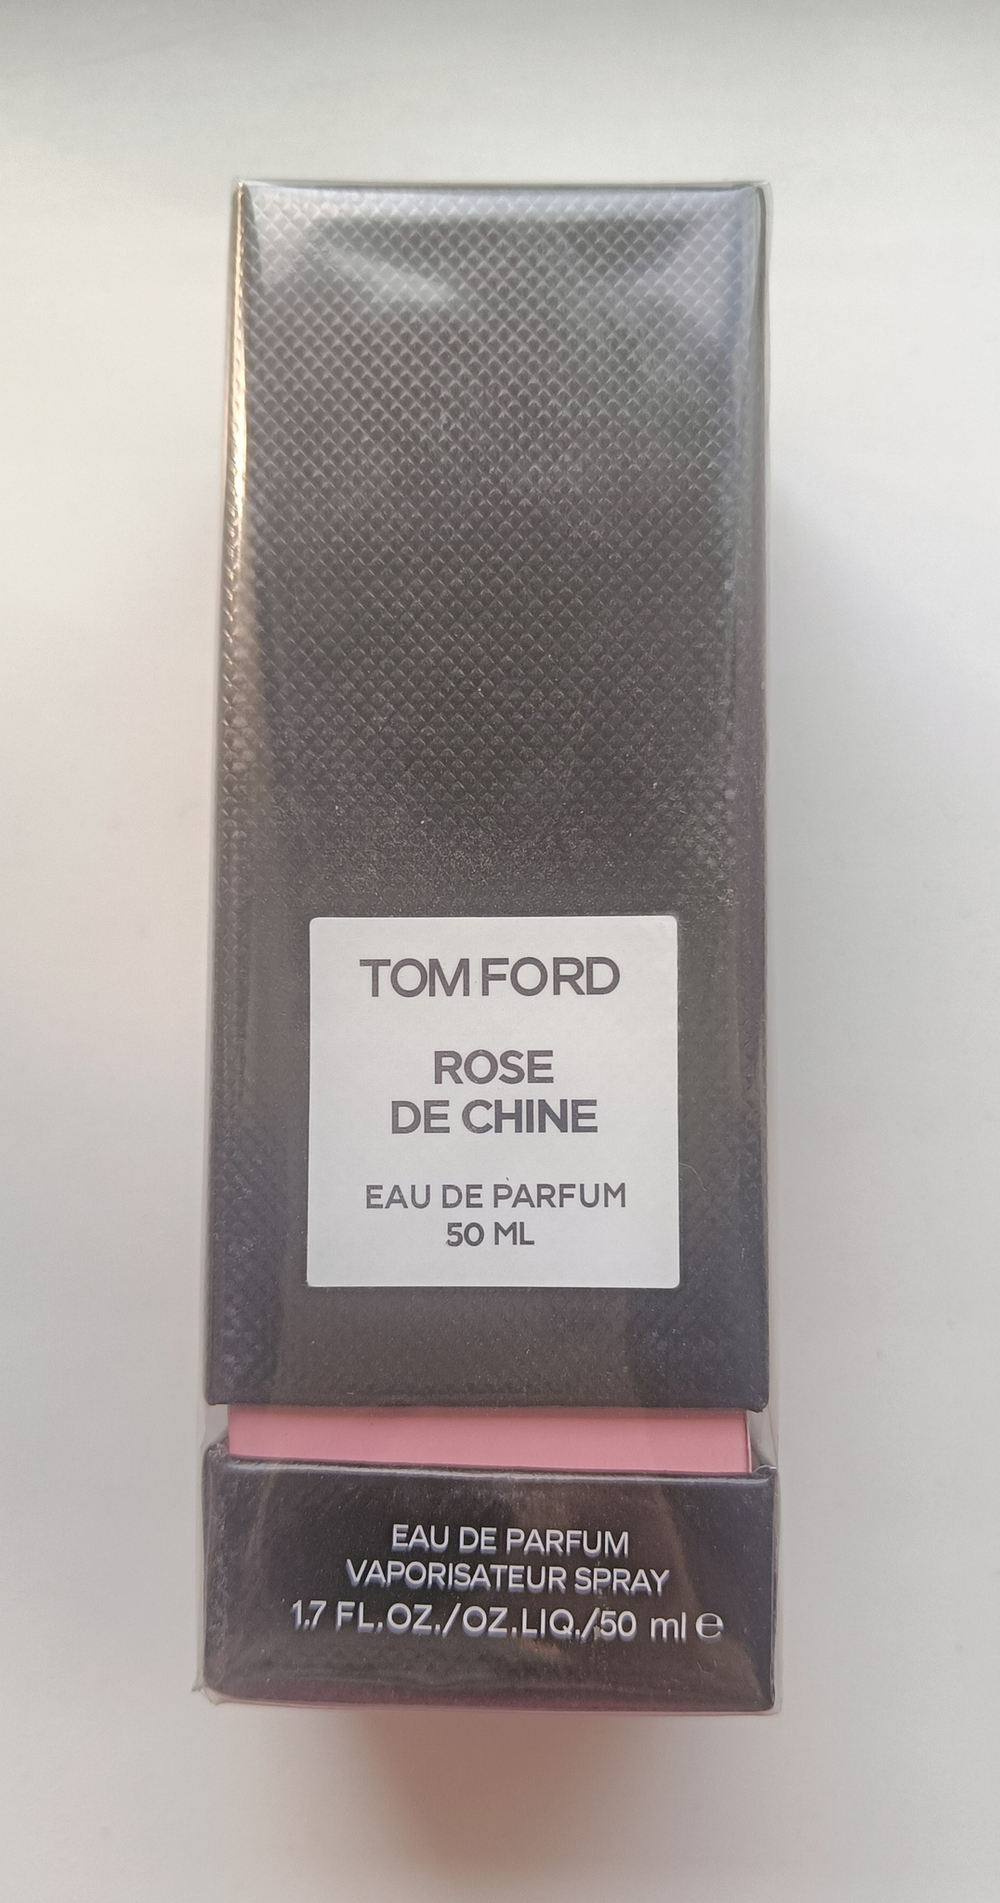 Tom Ford Rose De Chine 50ml (duty free парфюмерия)